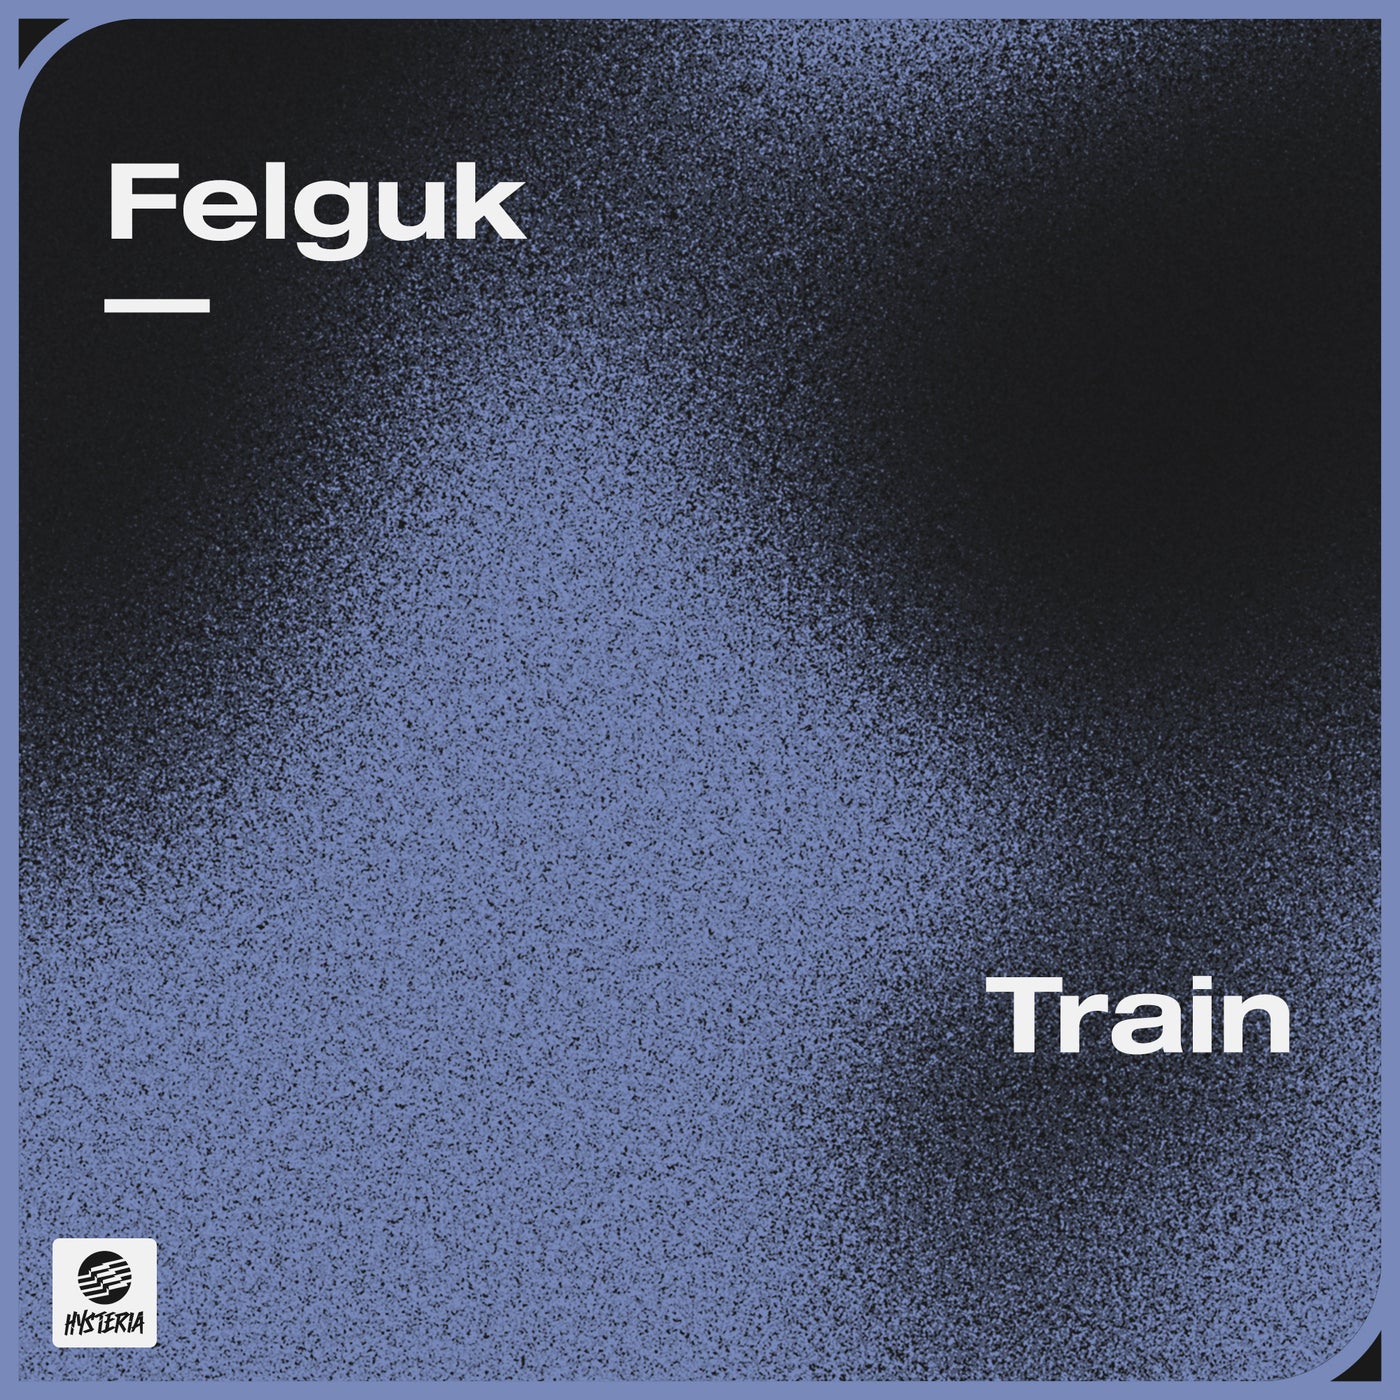 Felguk - Train (Extended Mix)